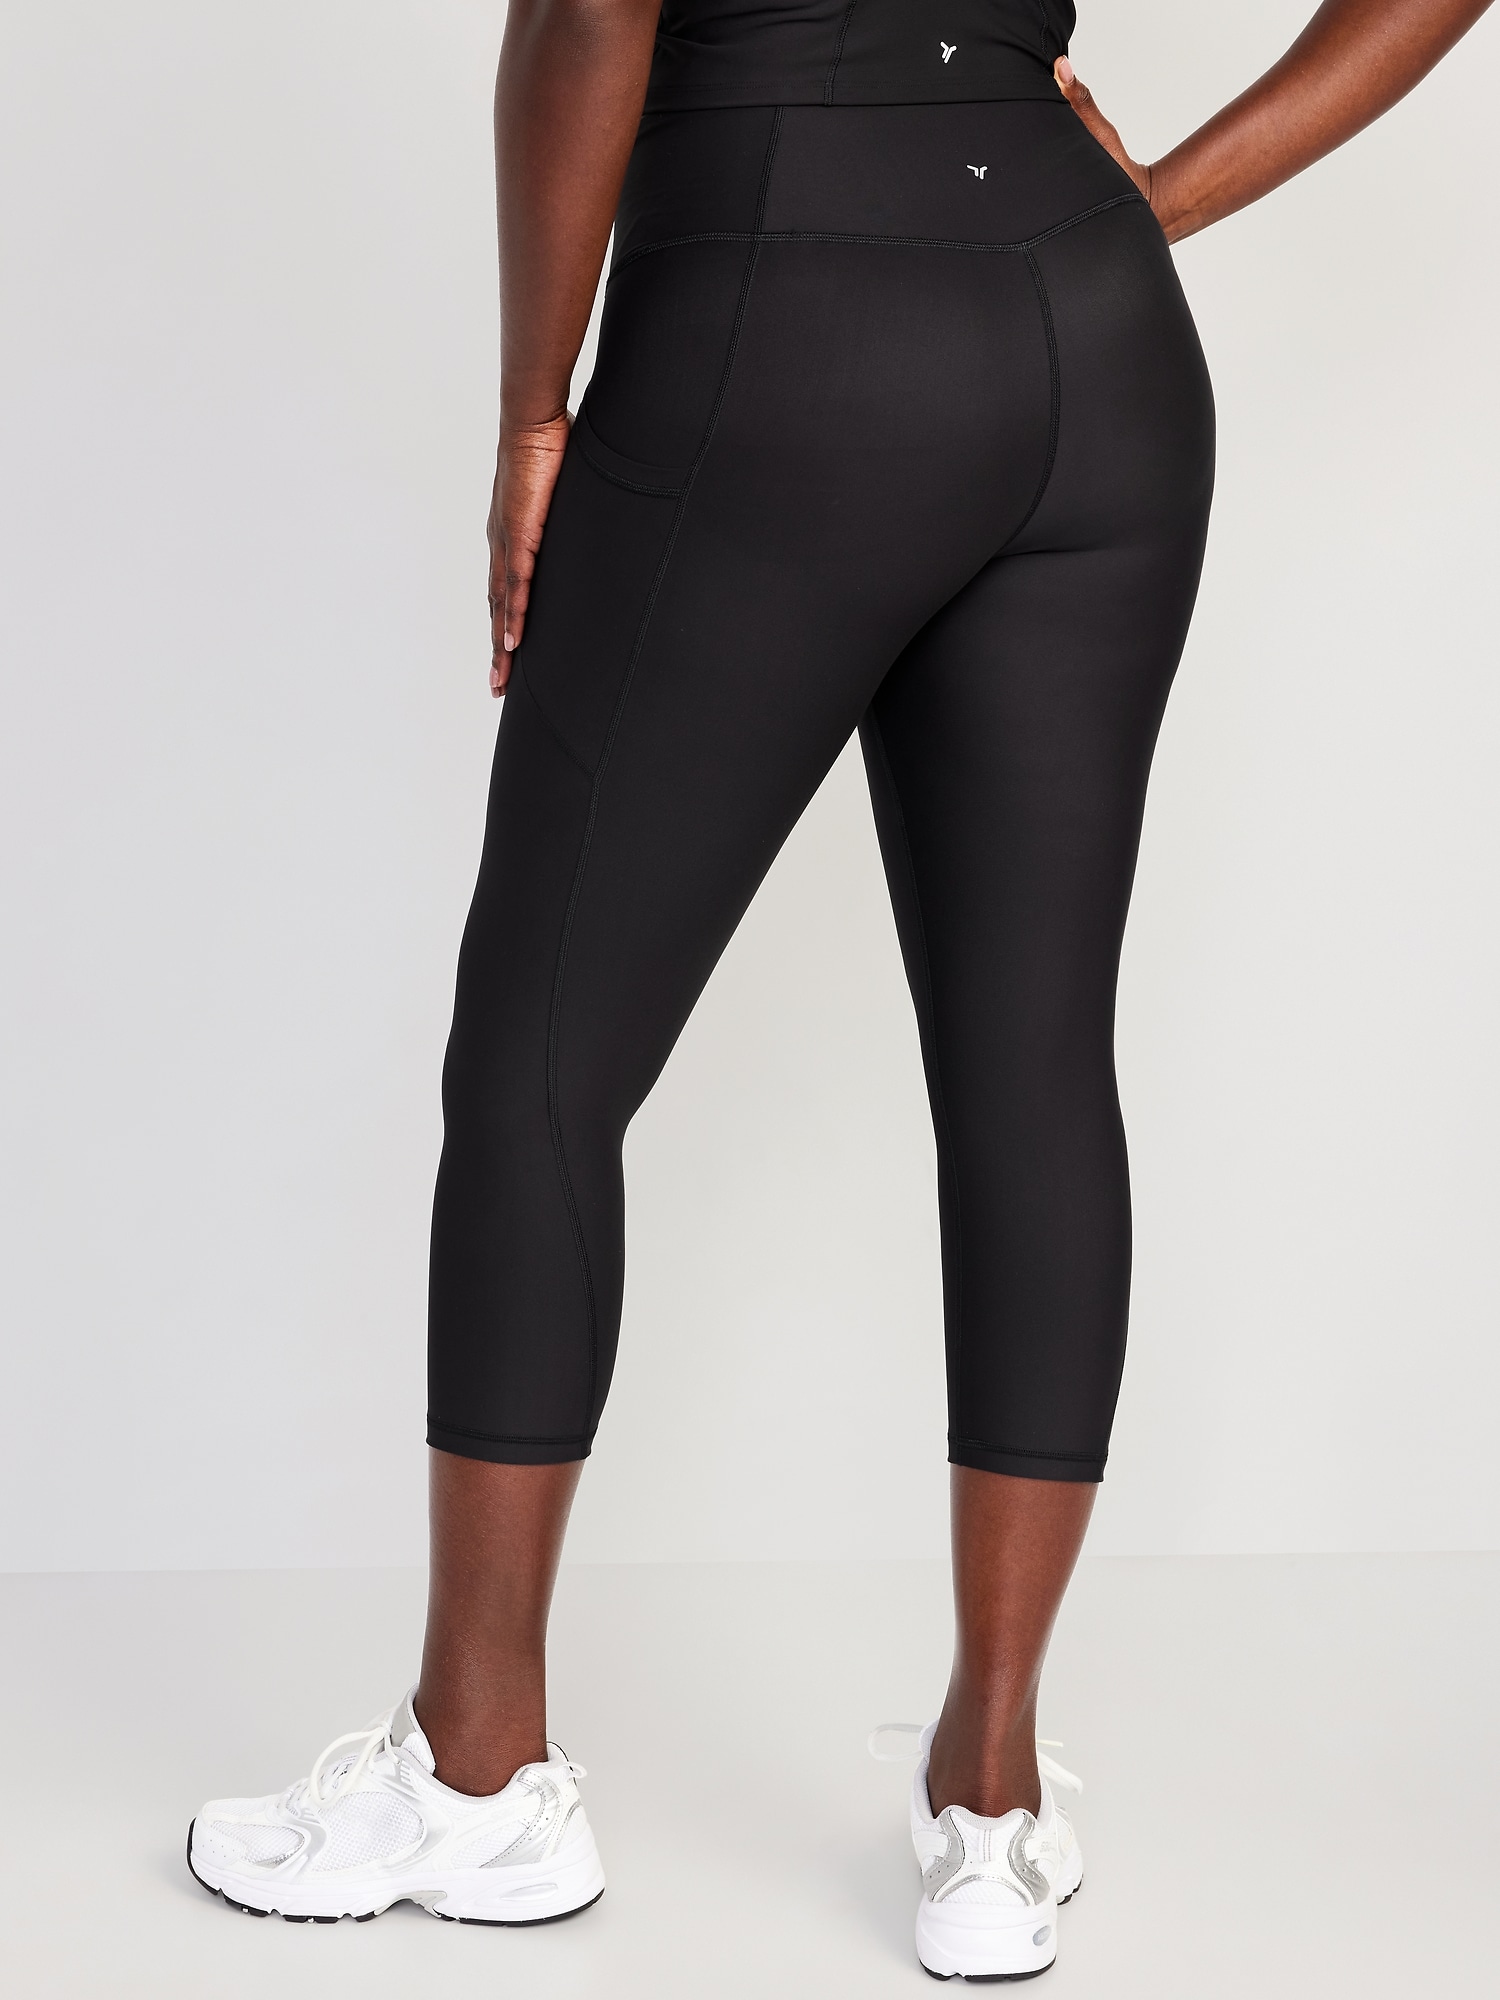 Nike Dri-Fit Womens Black Capri Crop Pants Running Leggings Size Medium